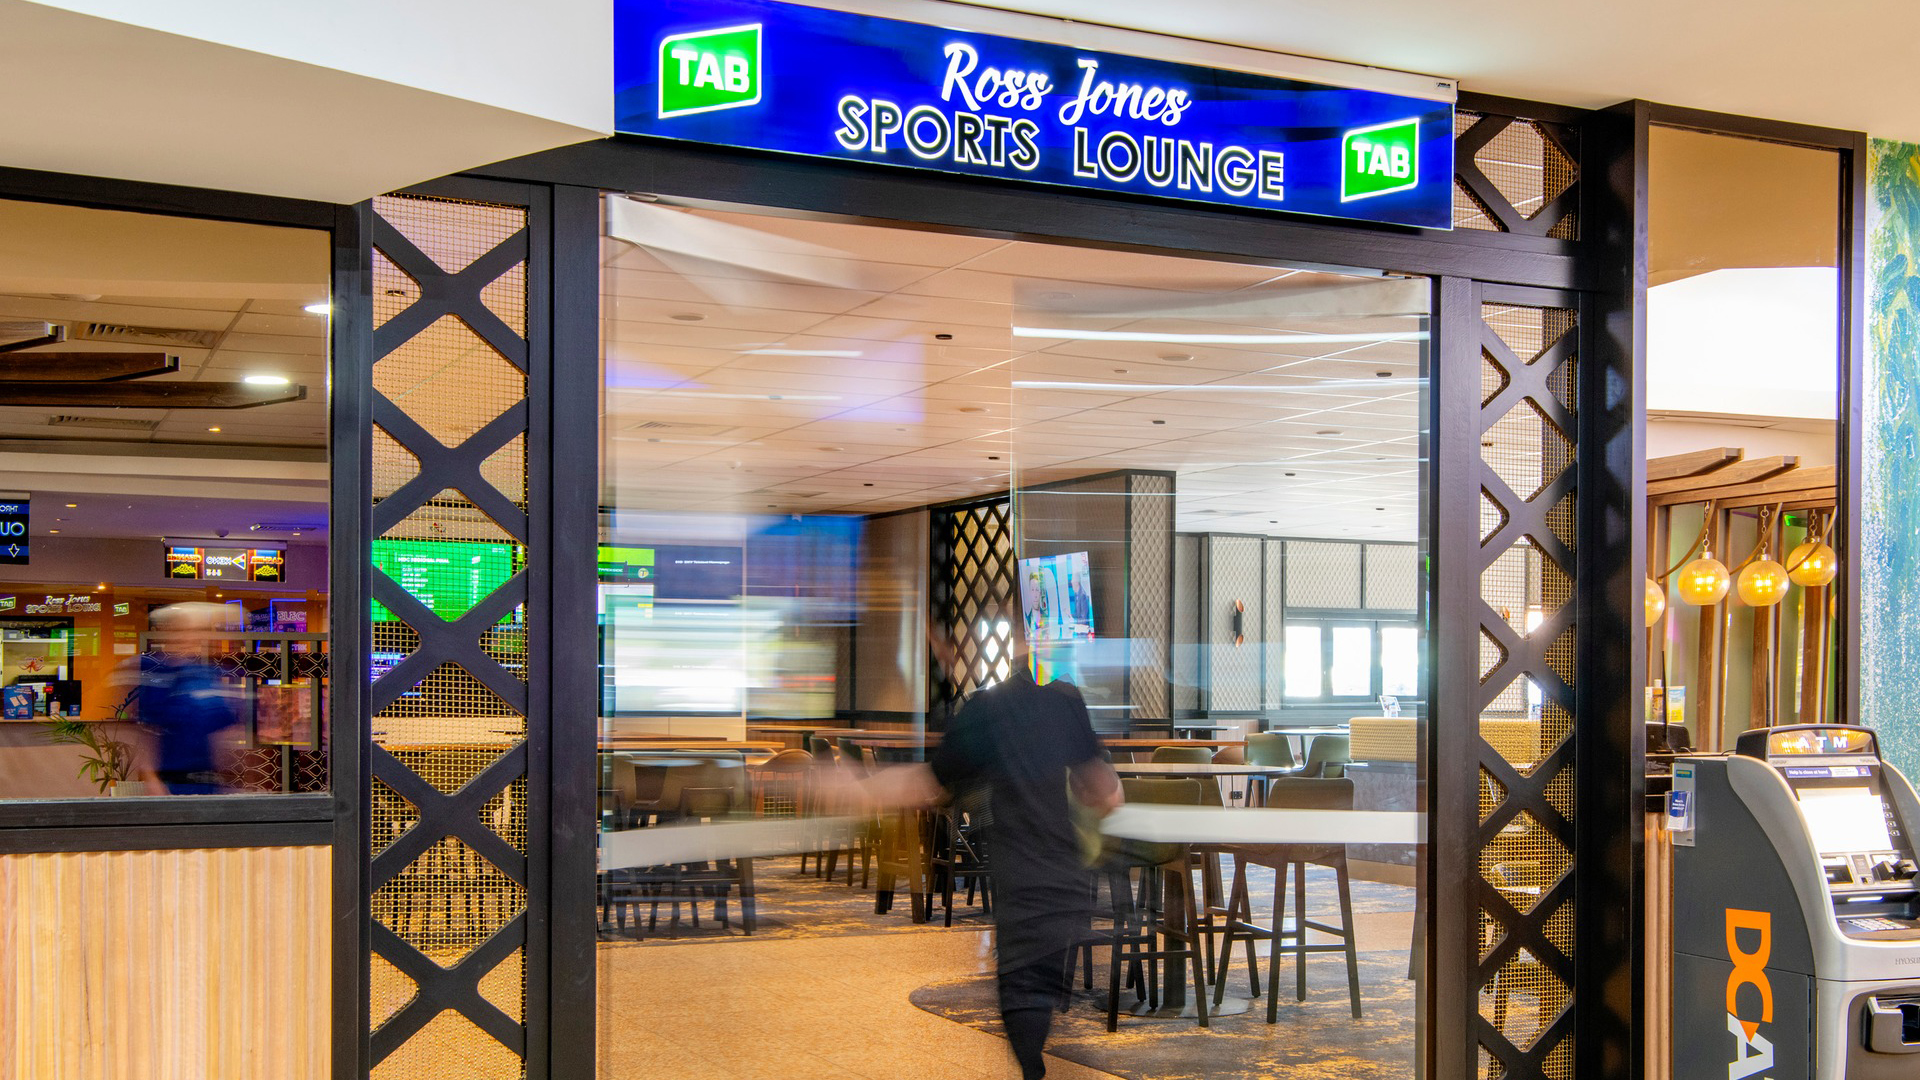 Entrance to Ross Jones Lounge